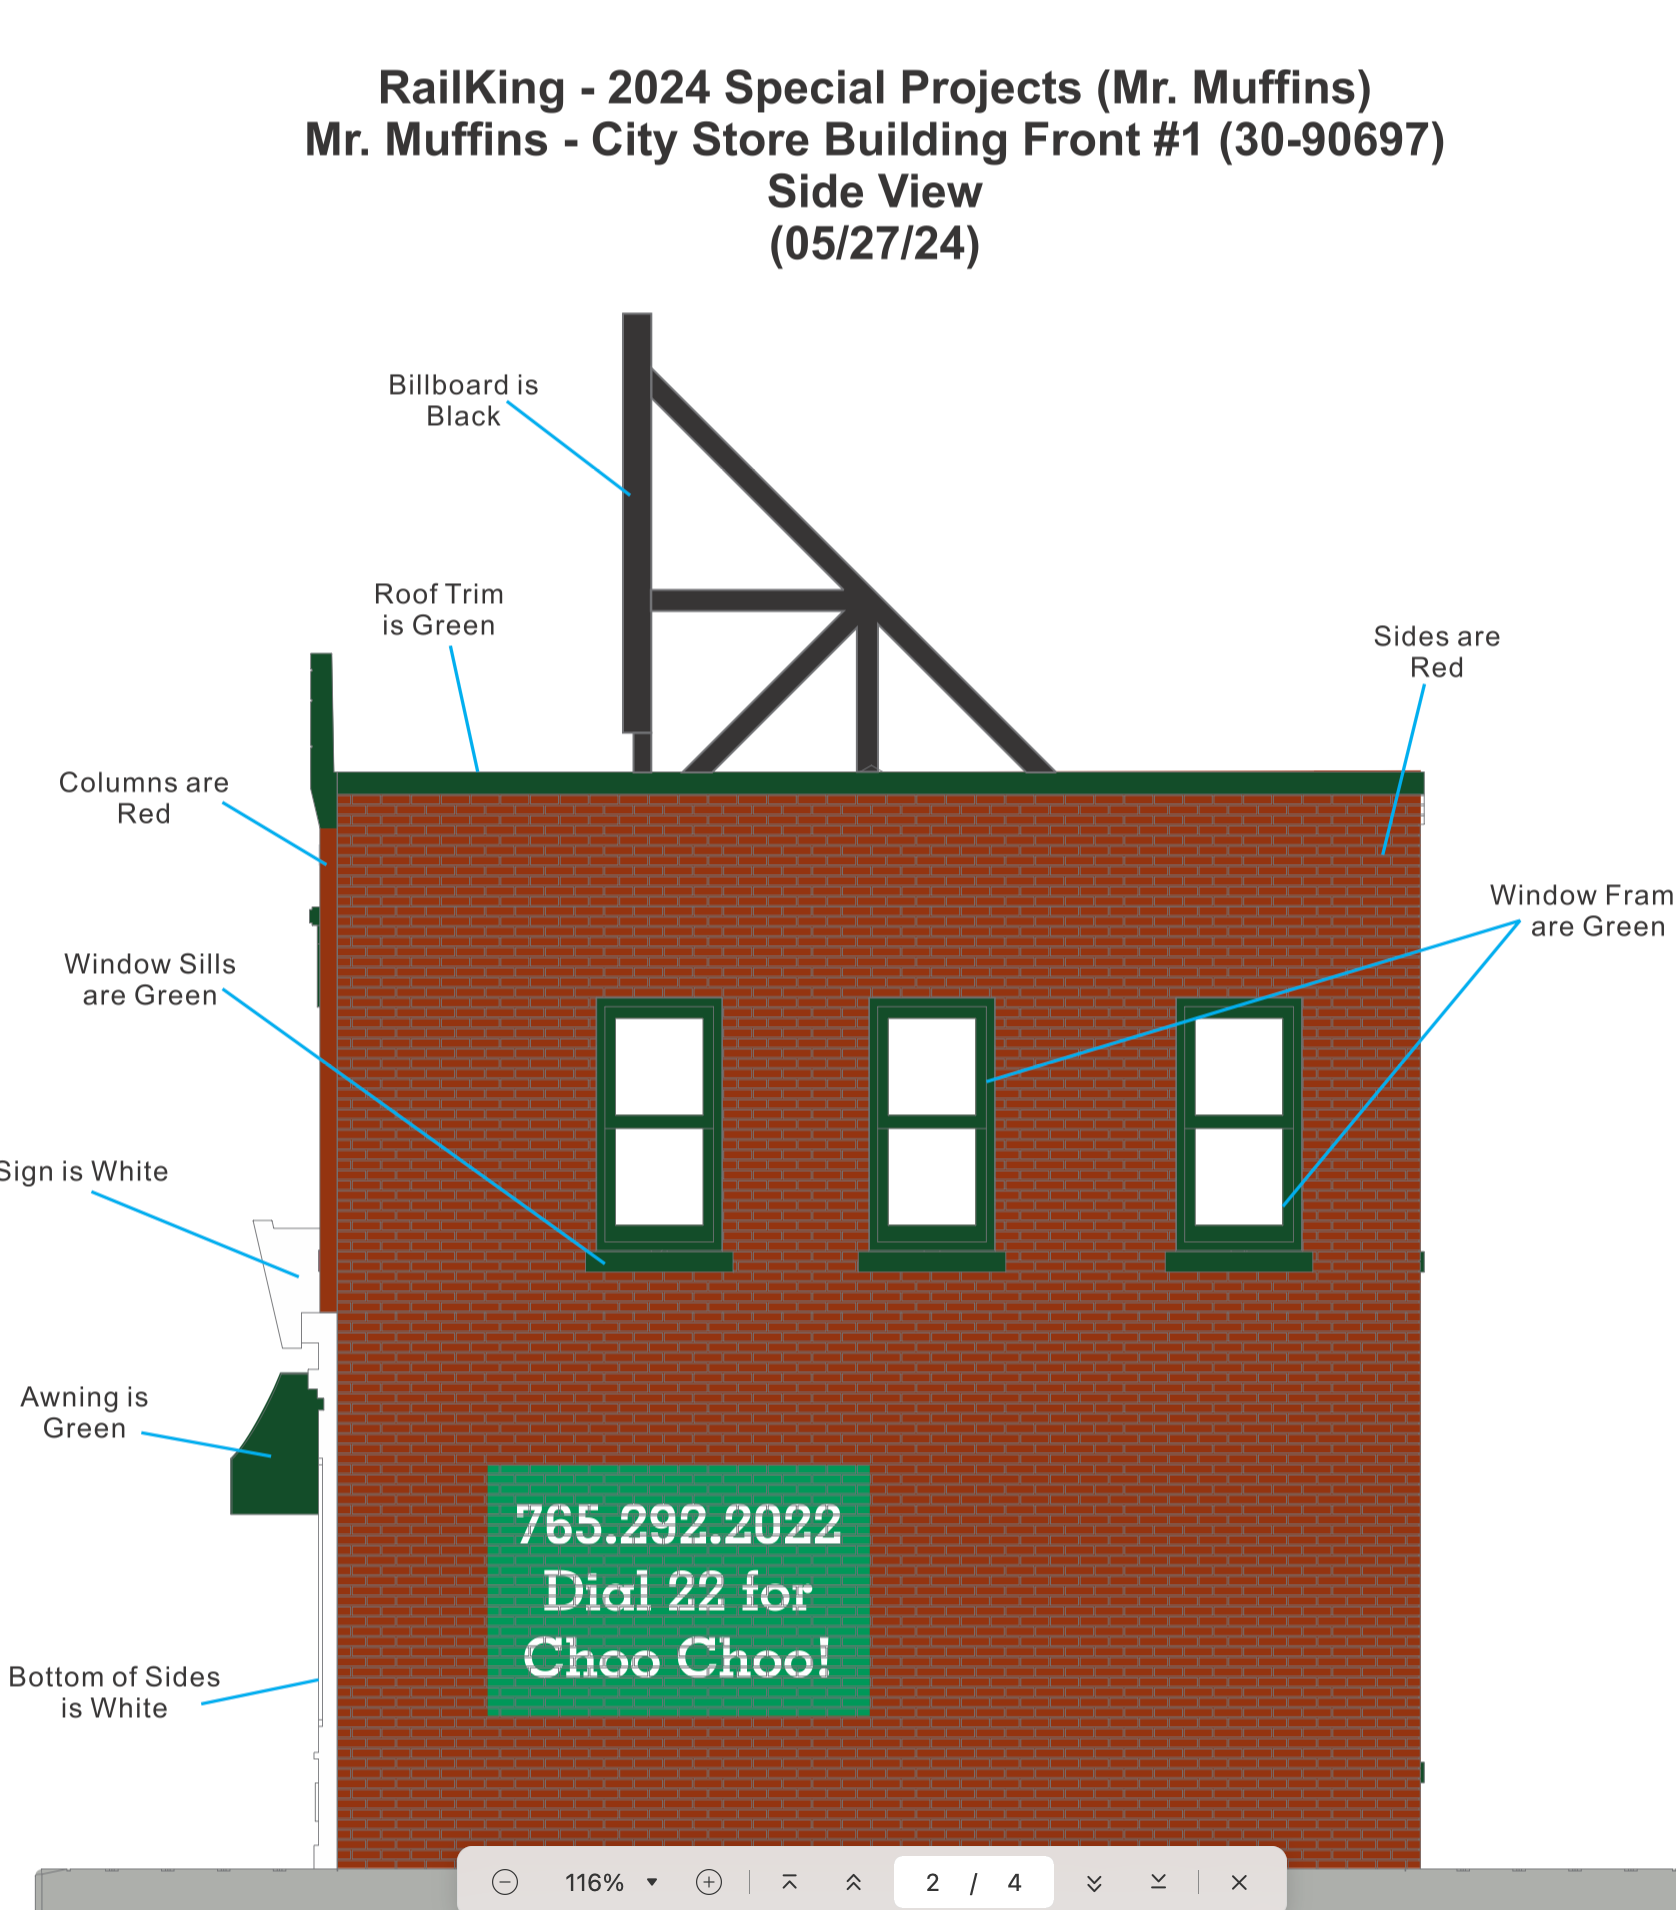 MTH 30-90697 - 2-Story City Building - "MrMuffin'sTrains" - Custom Run for MrMuffin'sTrains